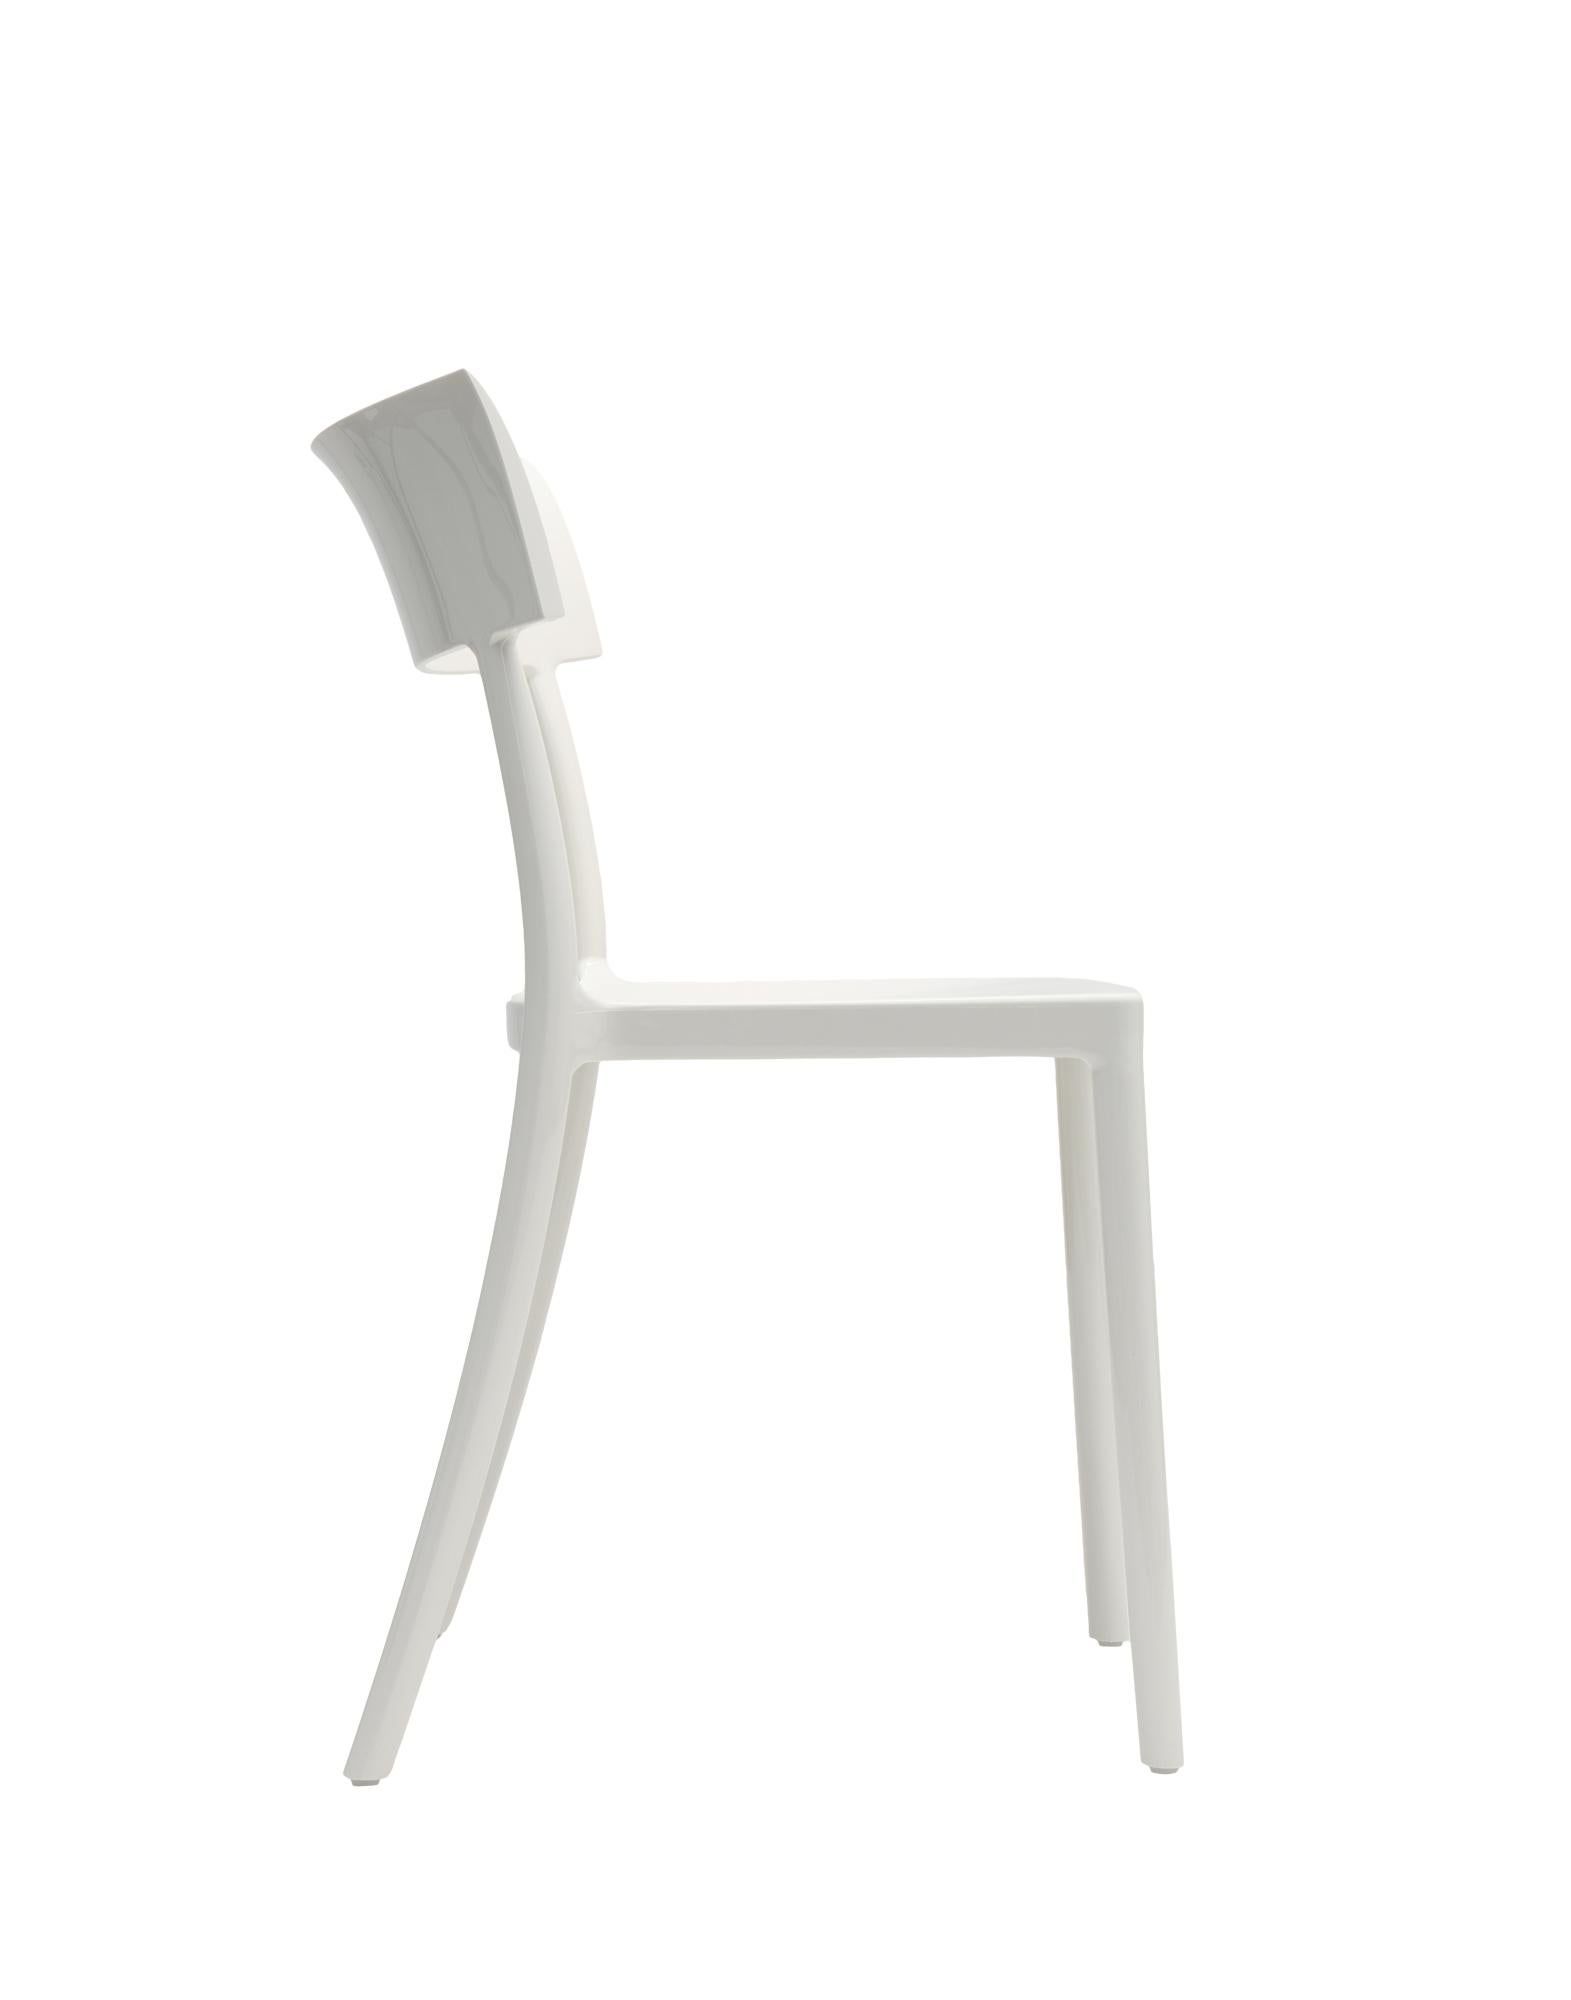 Italian Kartell Cat Walk Chair in White by Philippe Starck with Sergio Schito